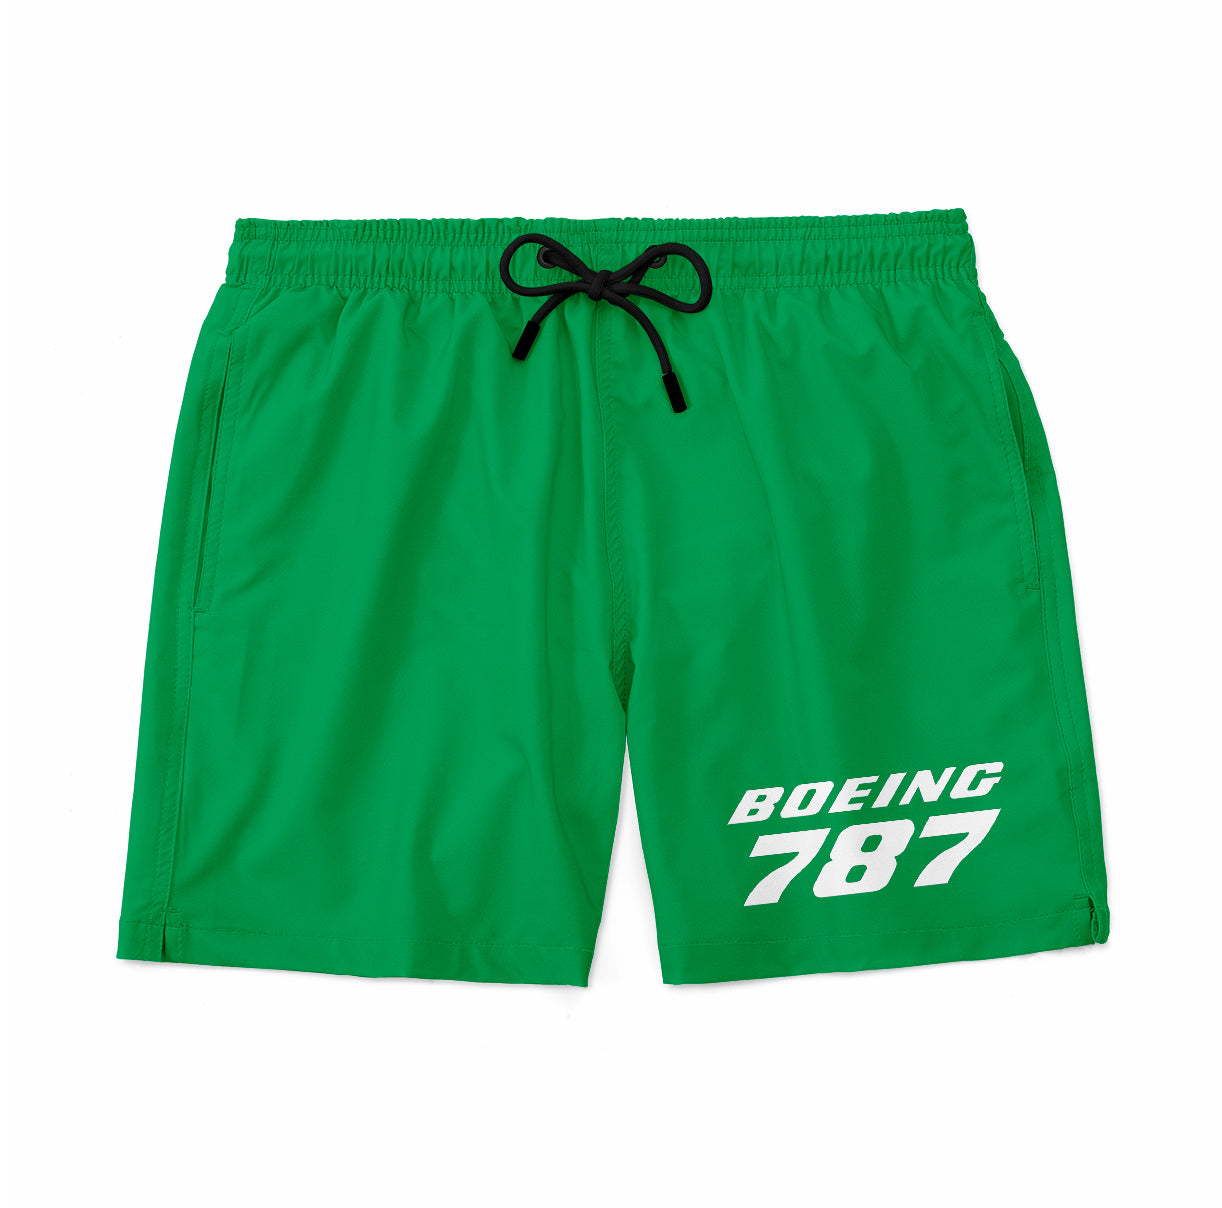 Boeing 787 & Text Designed Swim Trunks & Shorts